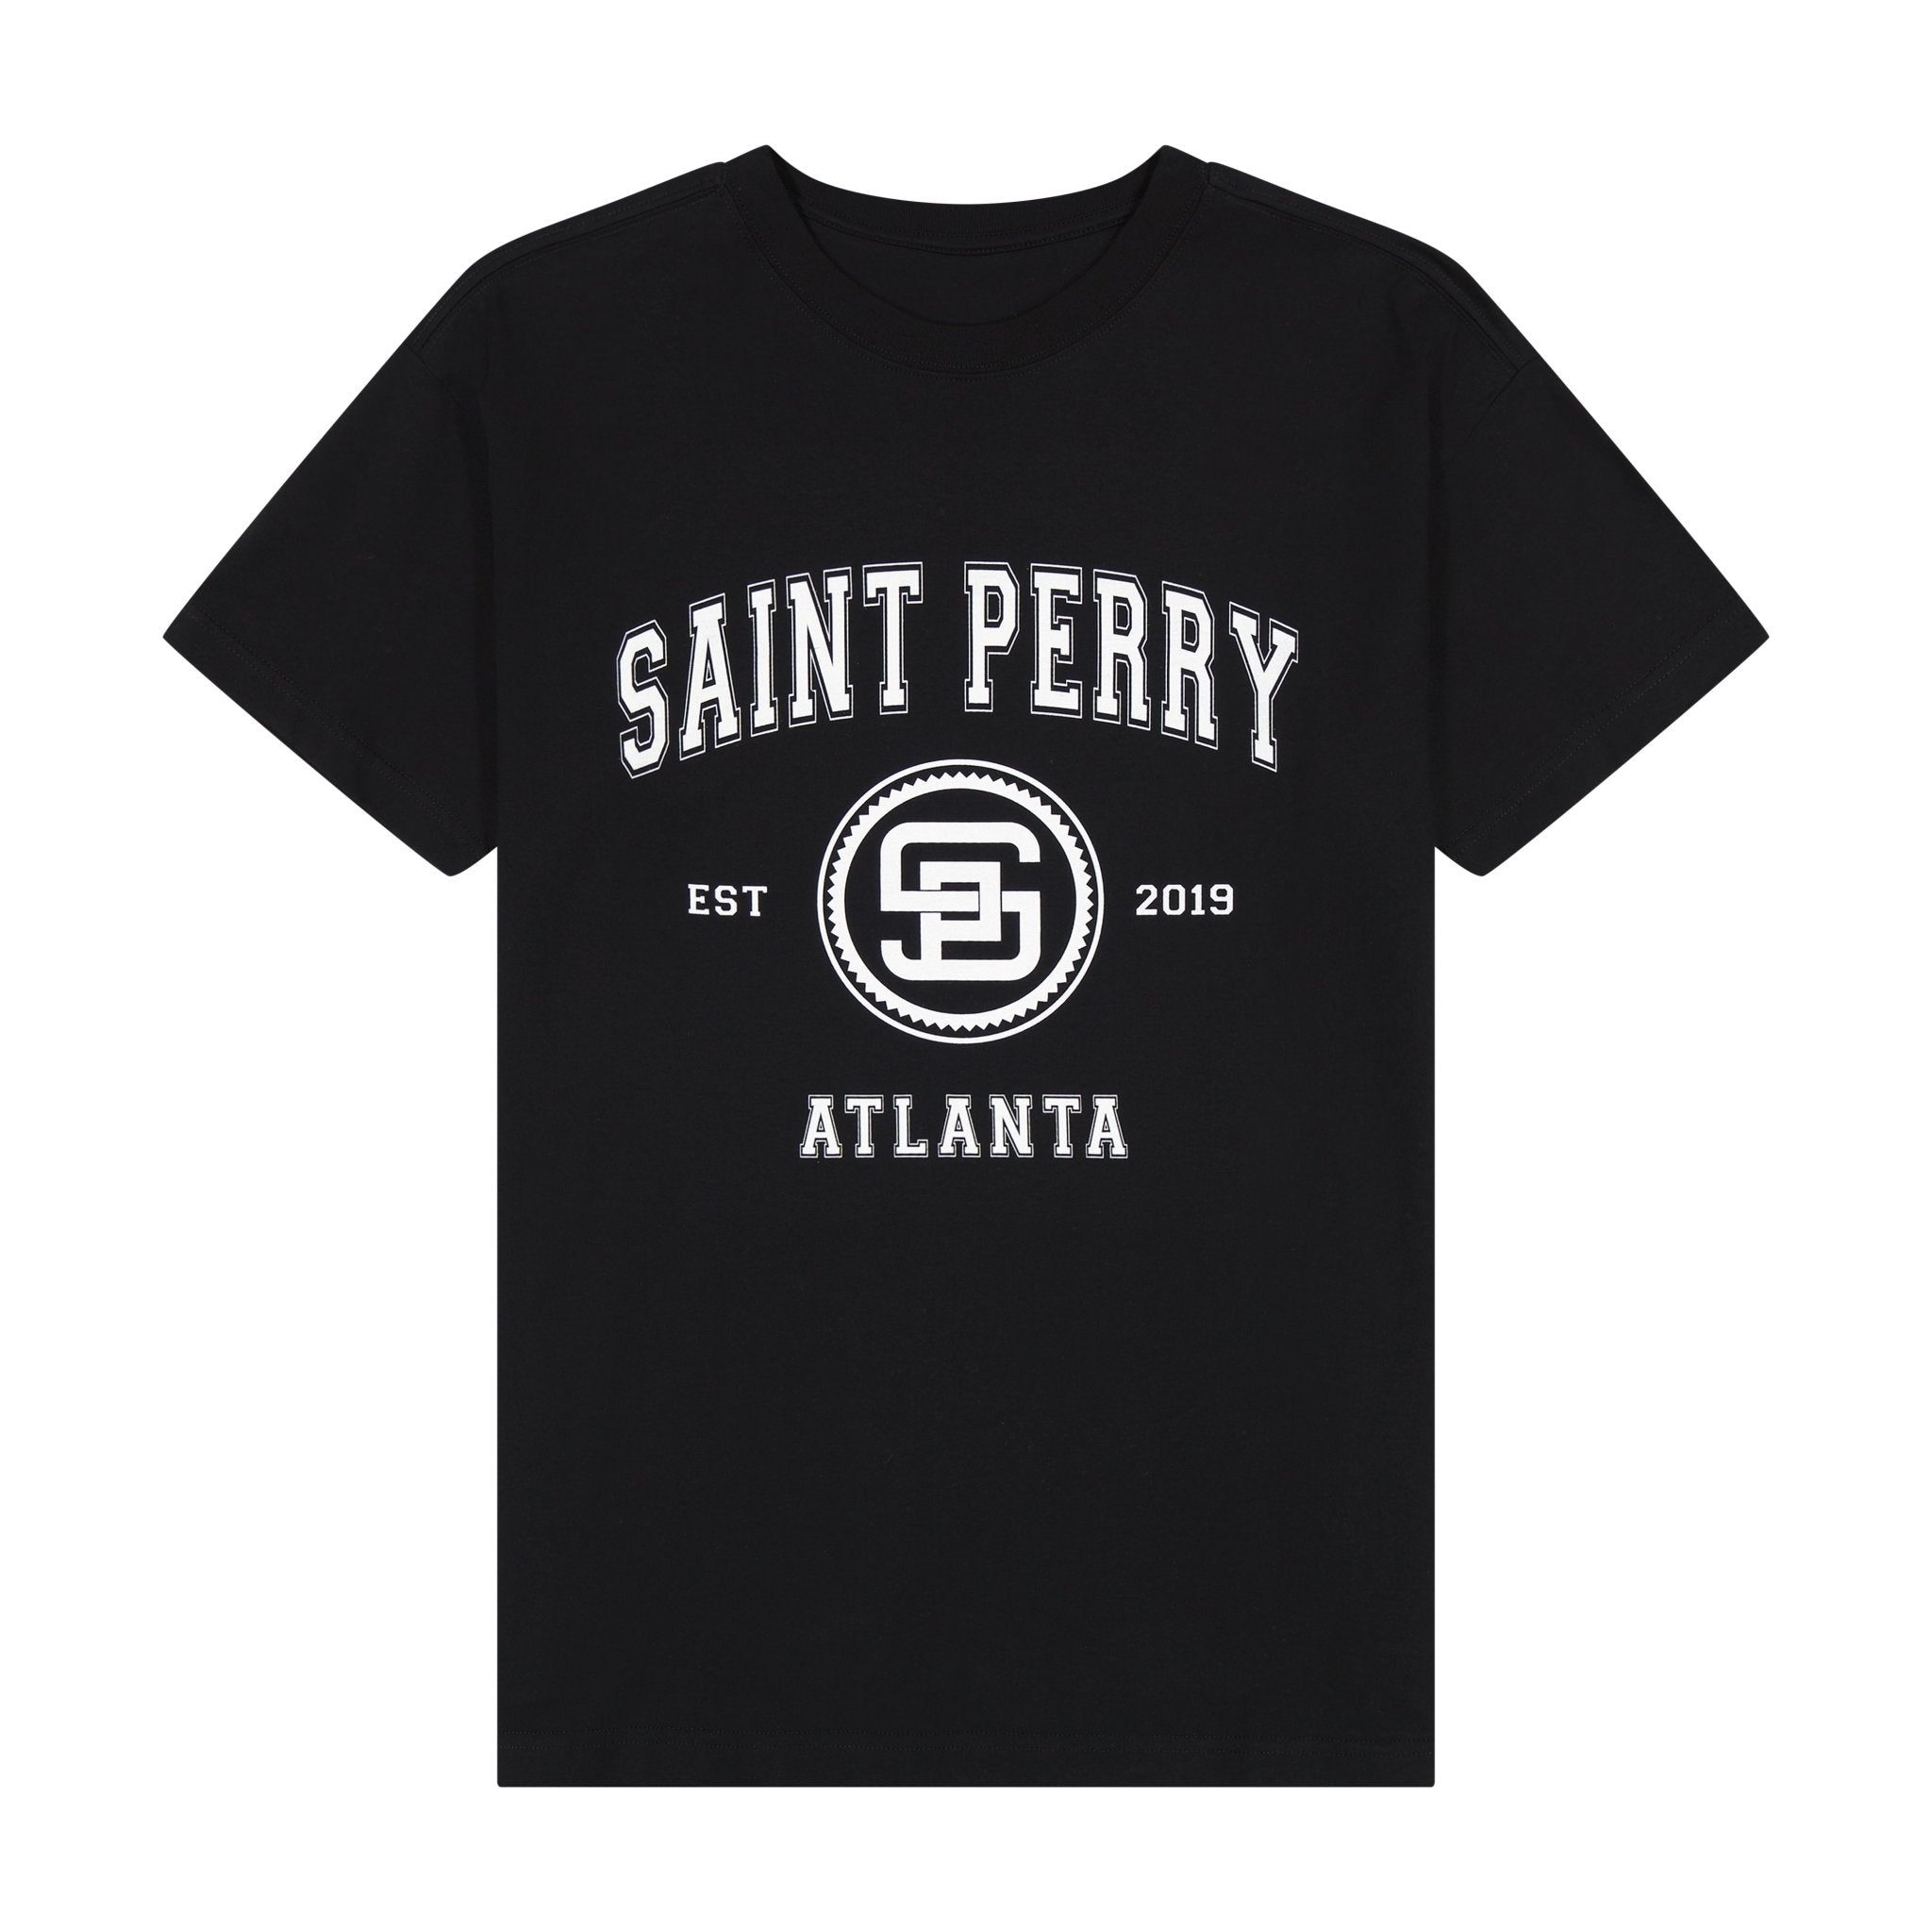 Atlanta t-shirt Black - SAINT PERRY